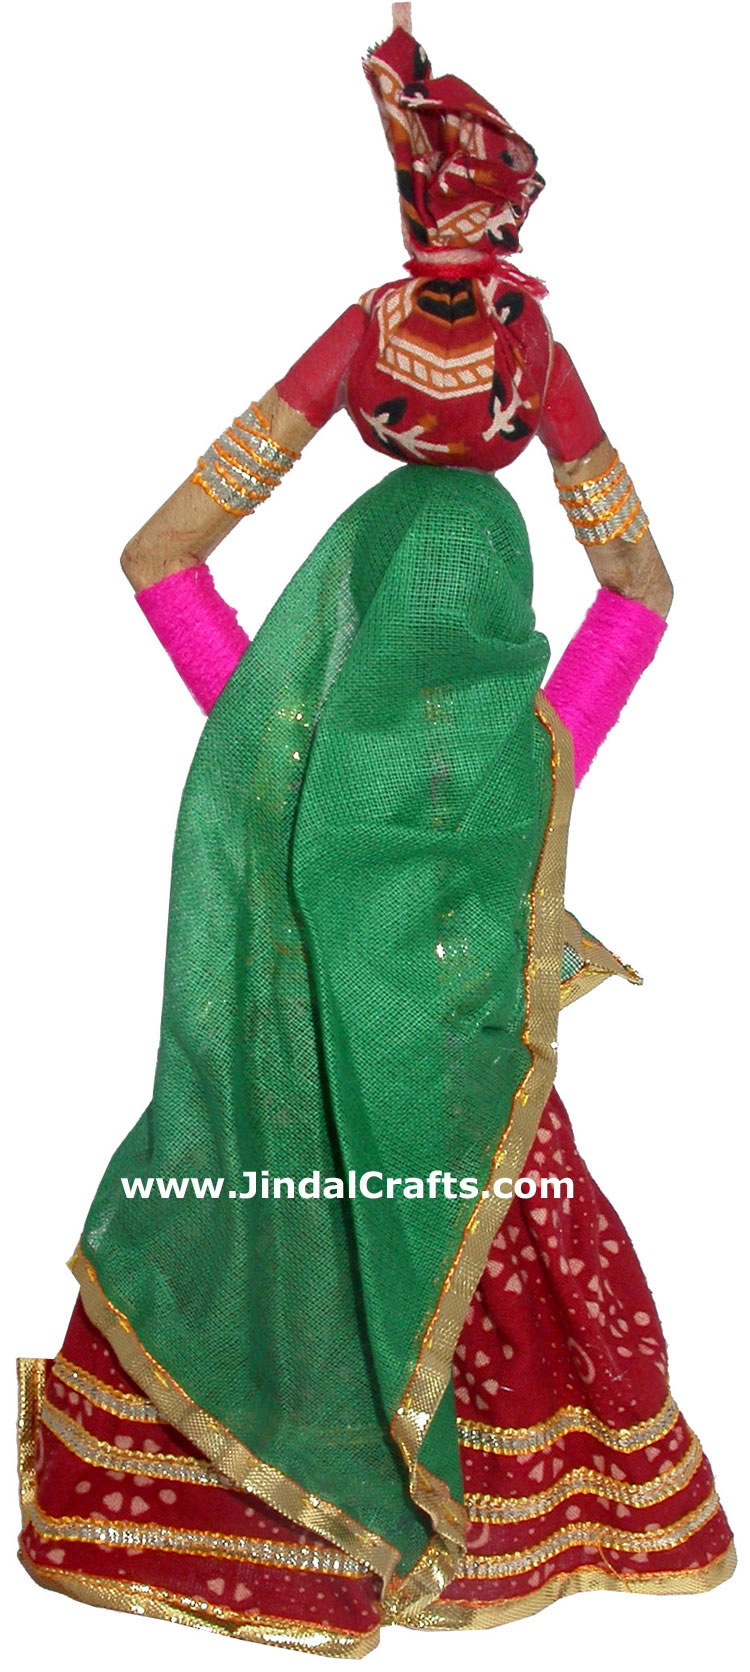 Handmade Traditional Hanging Village Dolls Indian Art